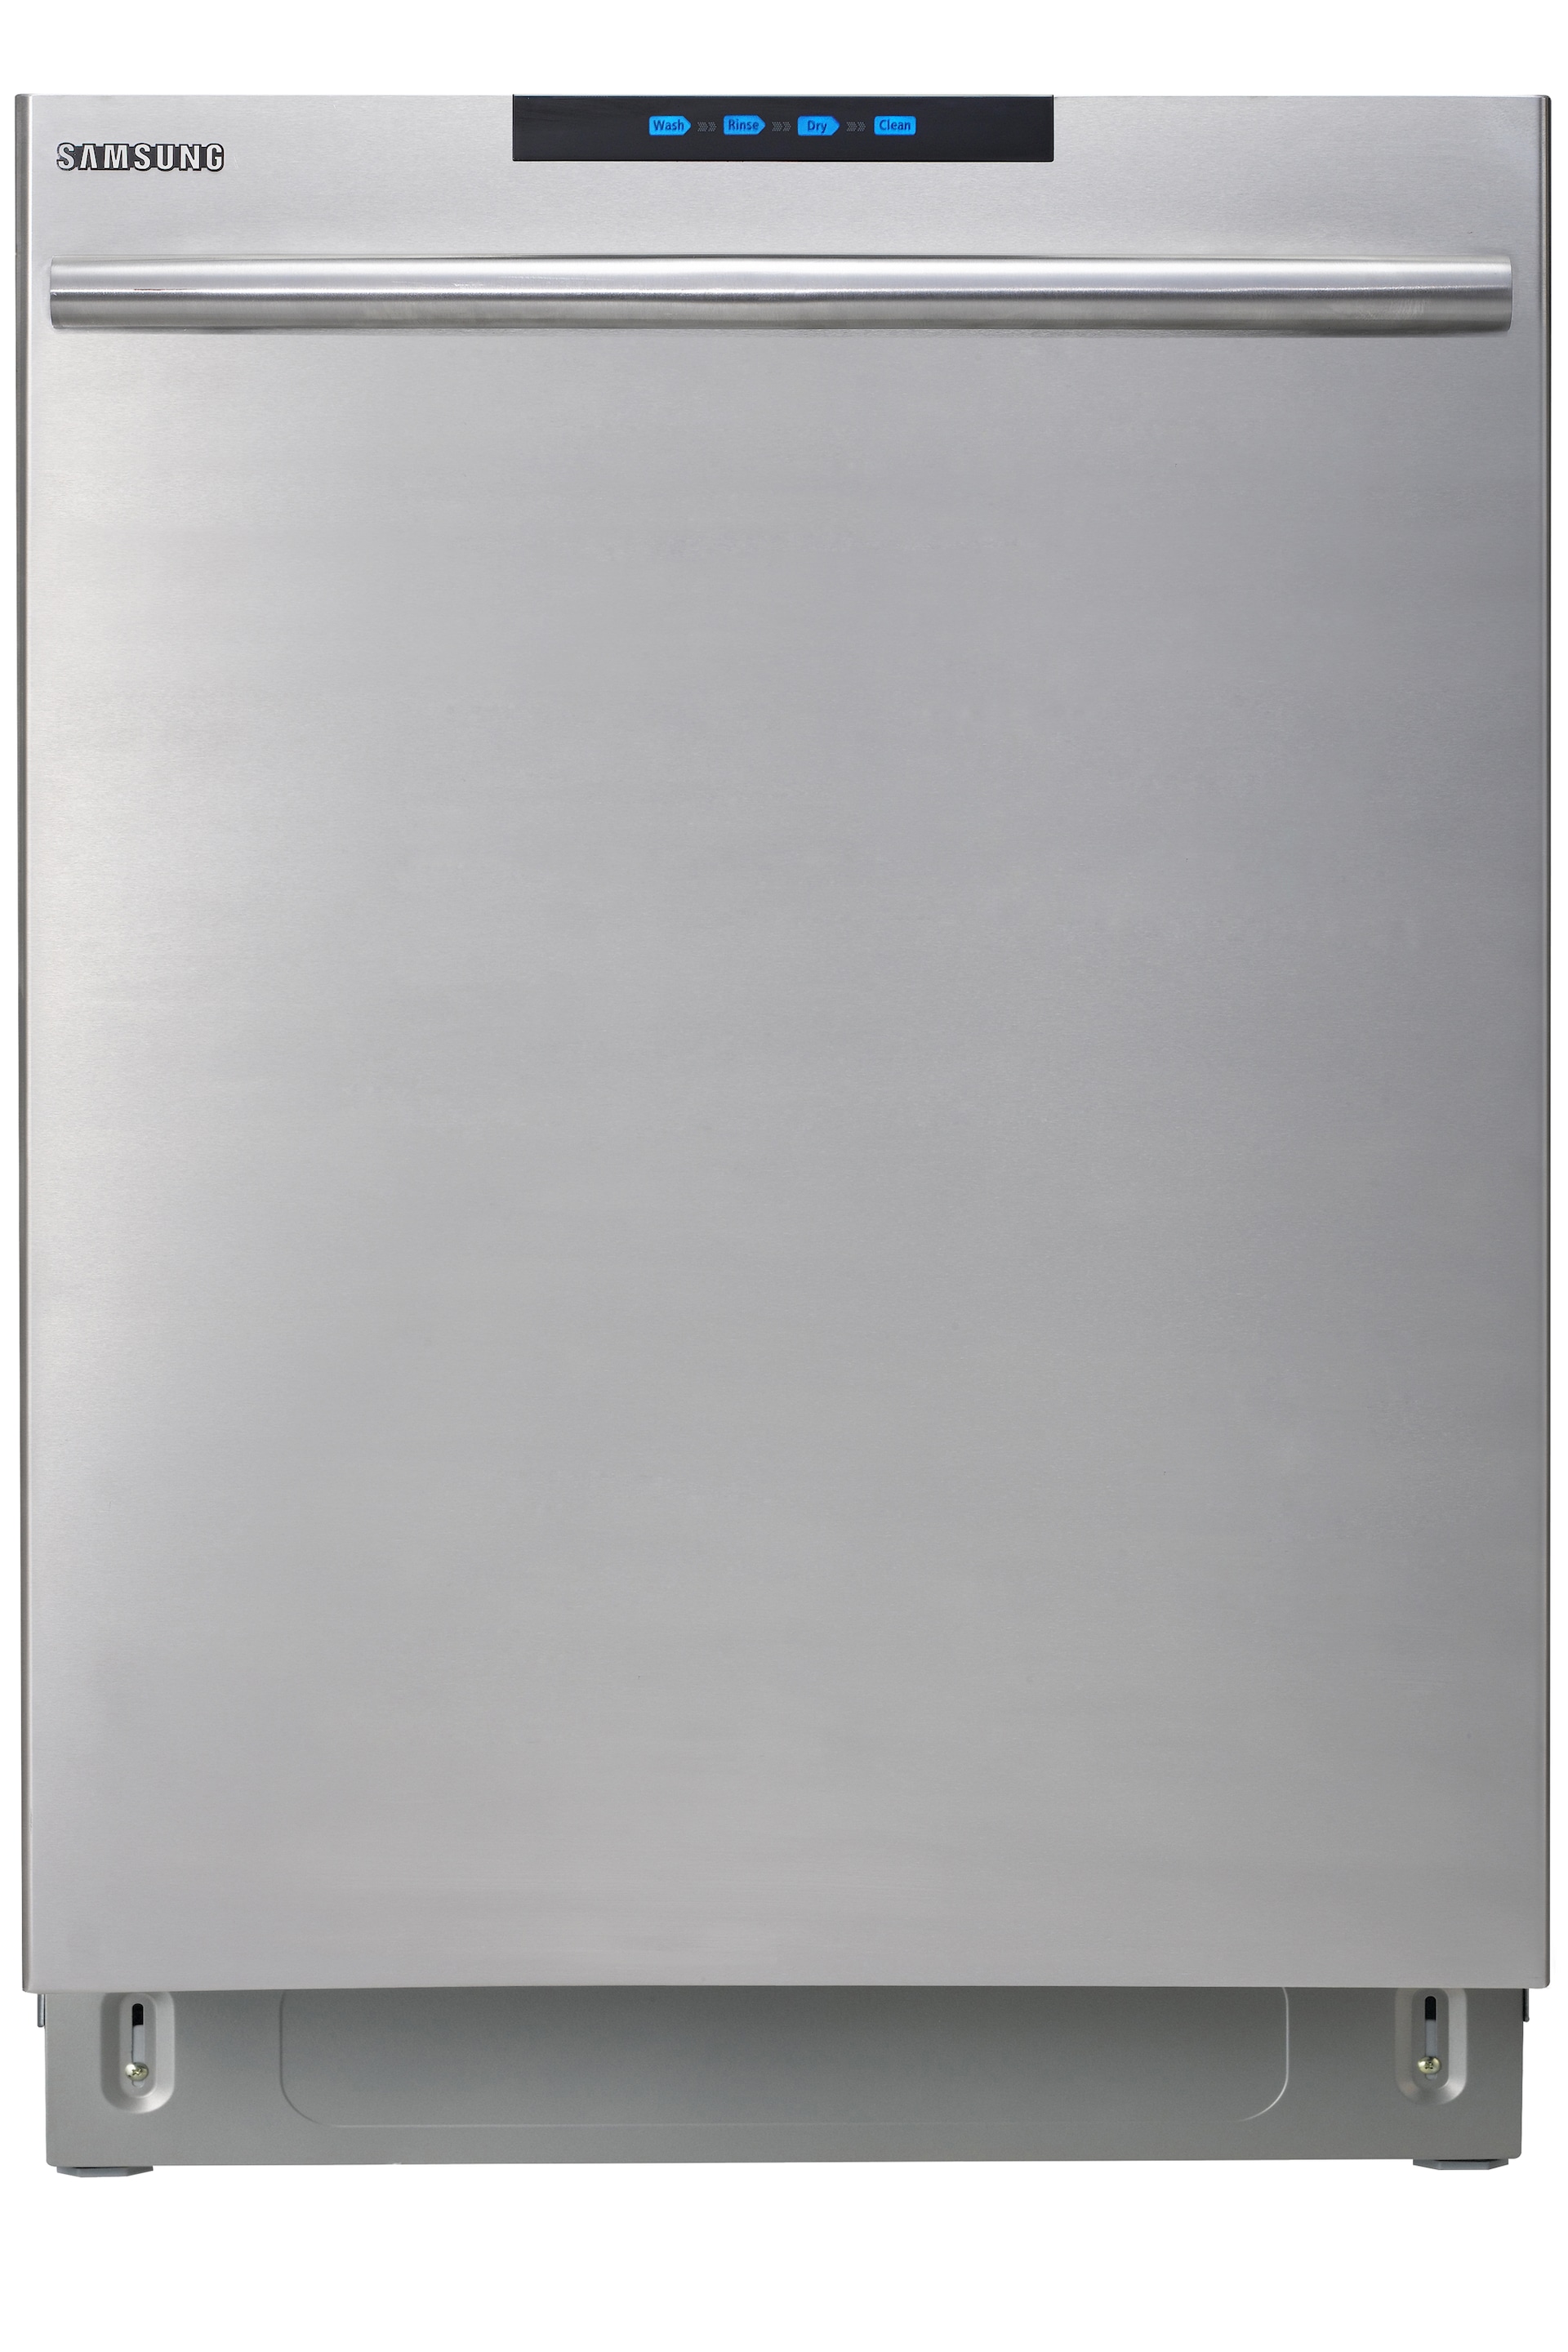 Samsung dishwasher manual dw7933lrasr